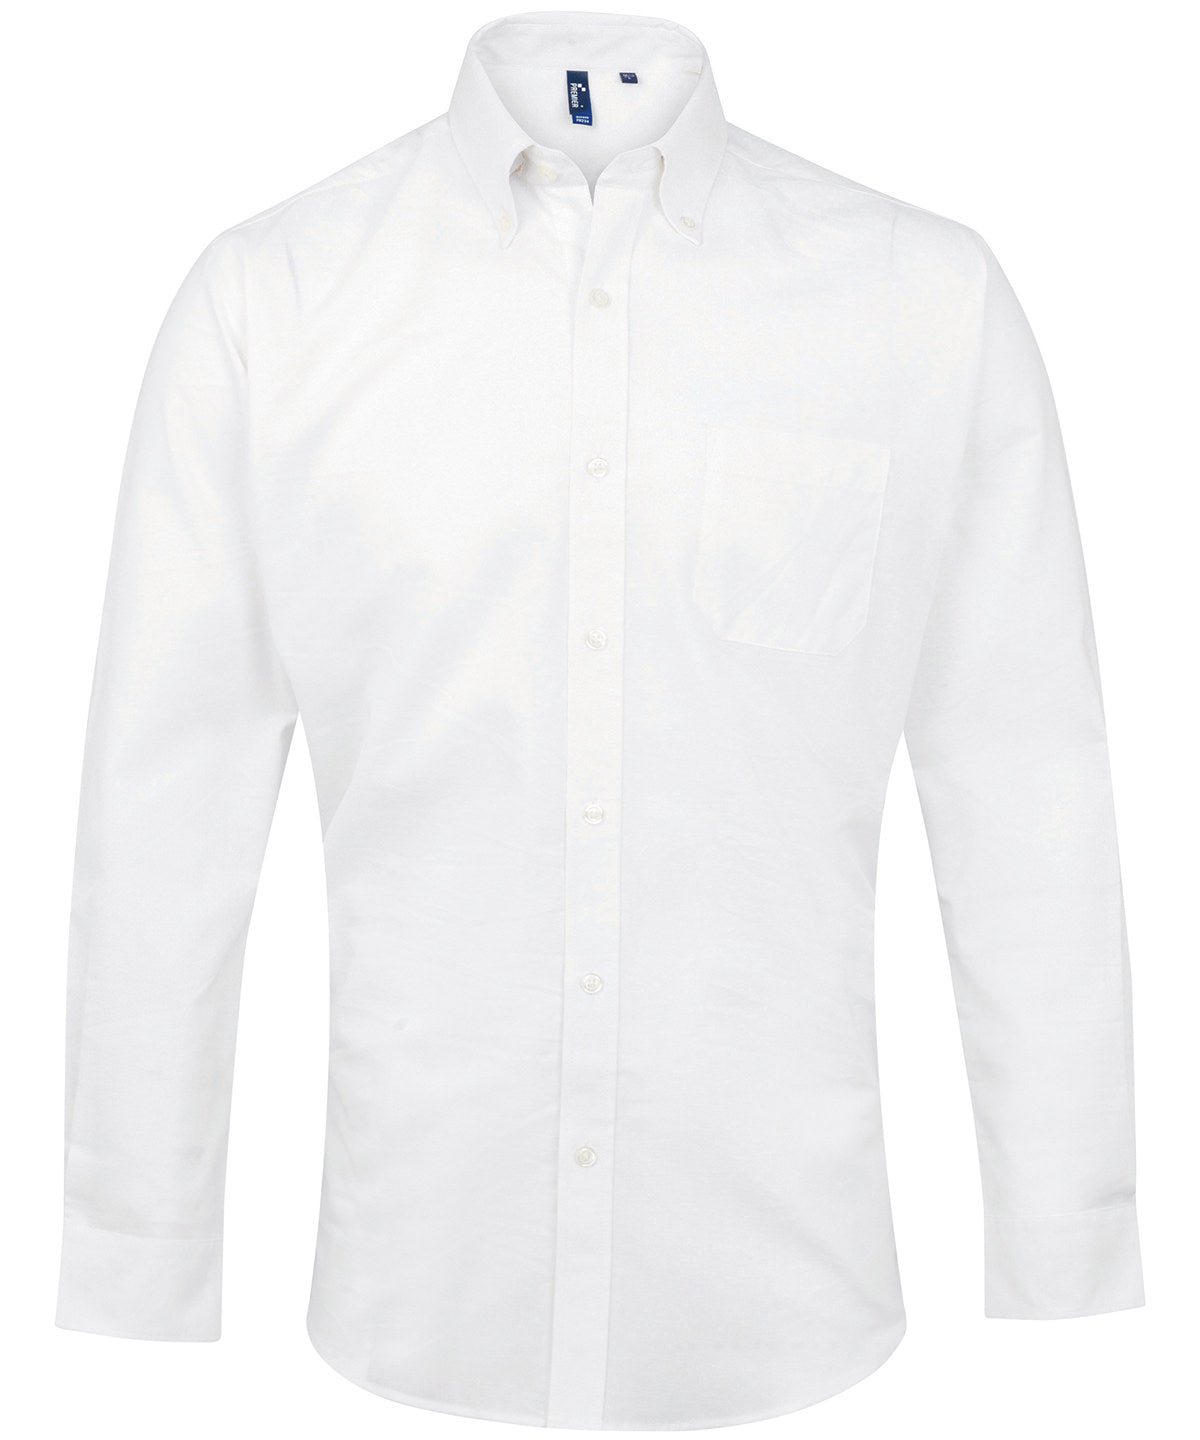 Bolir - Signature Oxford Long Sleeve Shirt